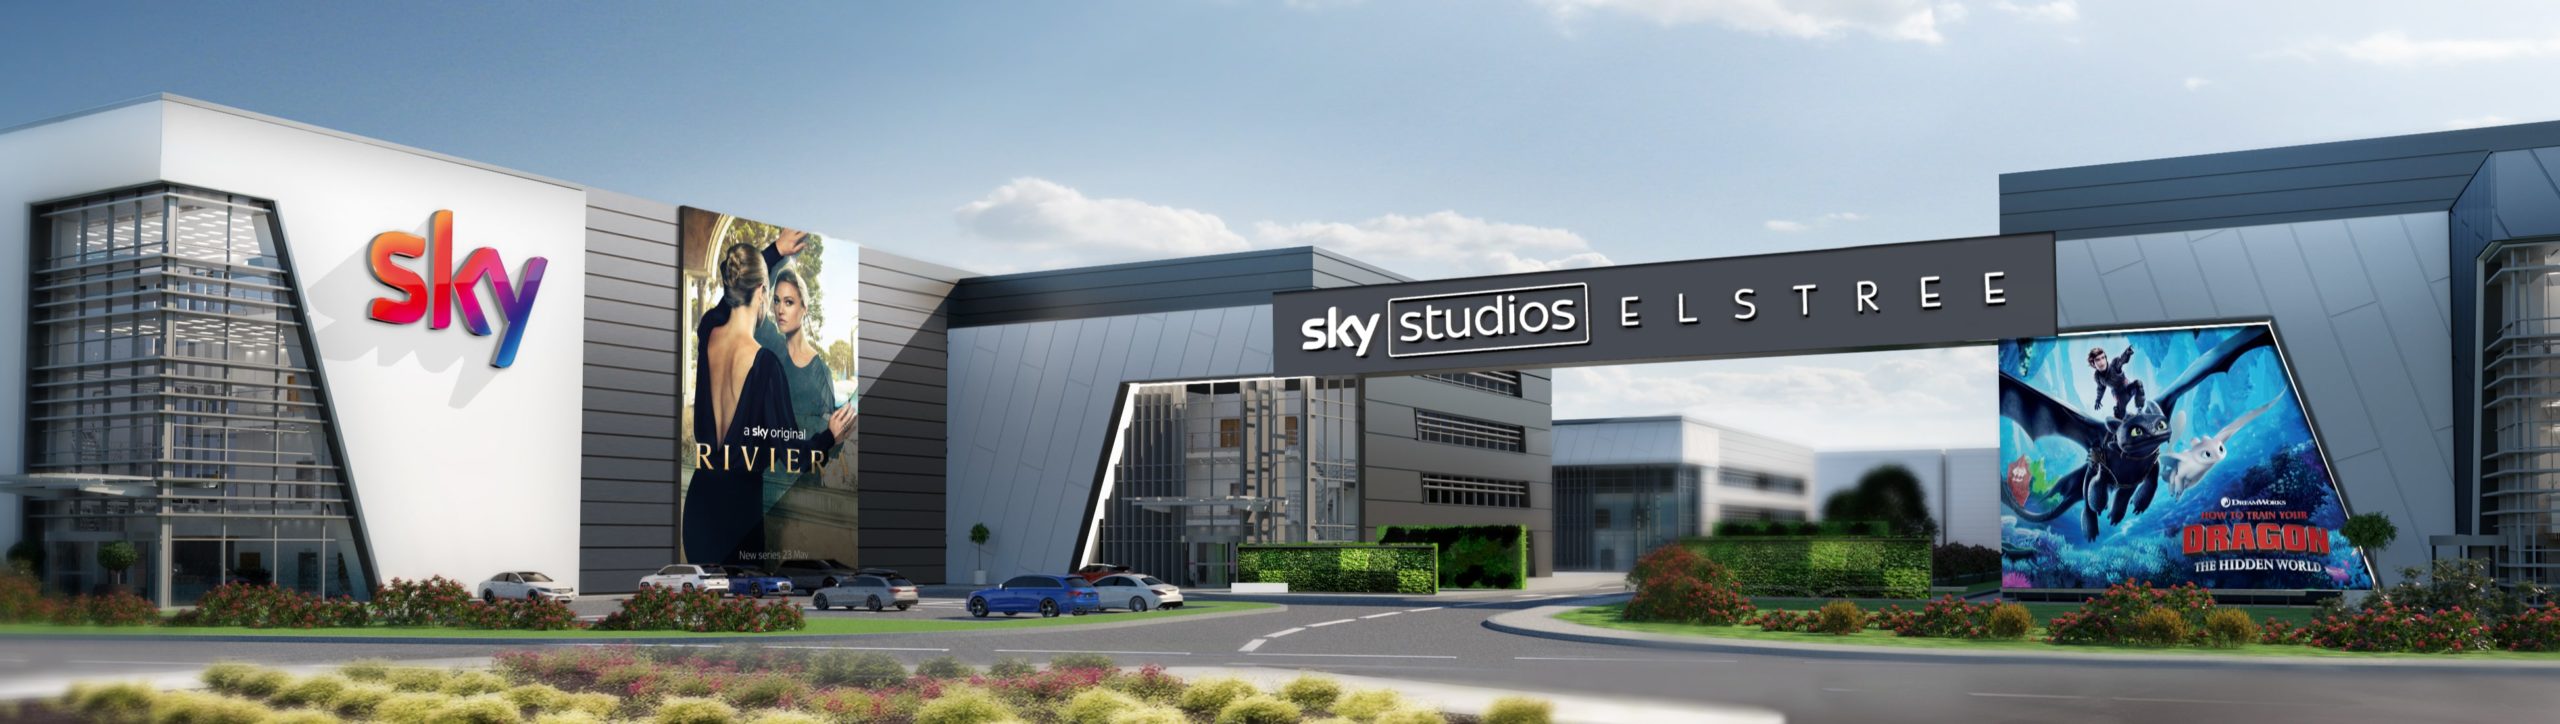 sky studios elstree tour